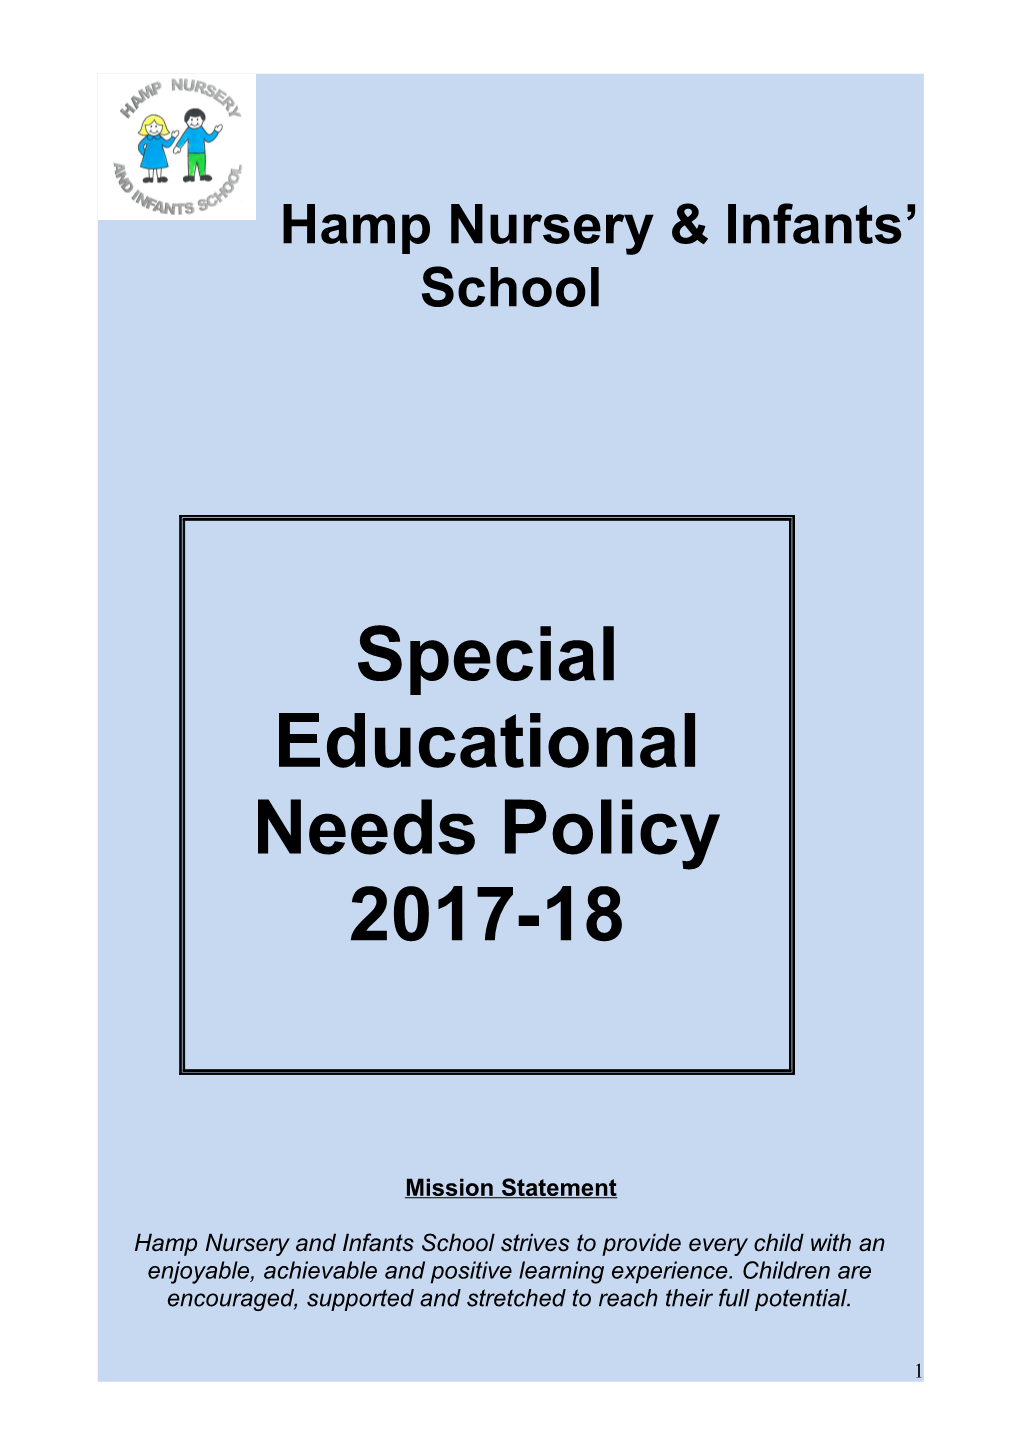 Hamp Nursery & Infants School